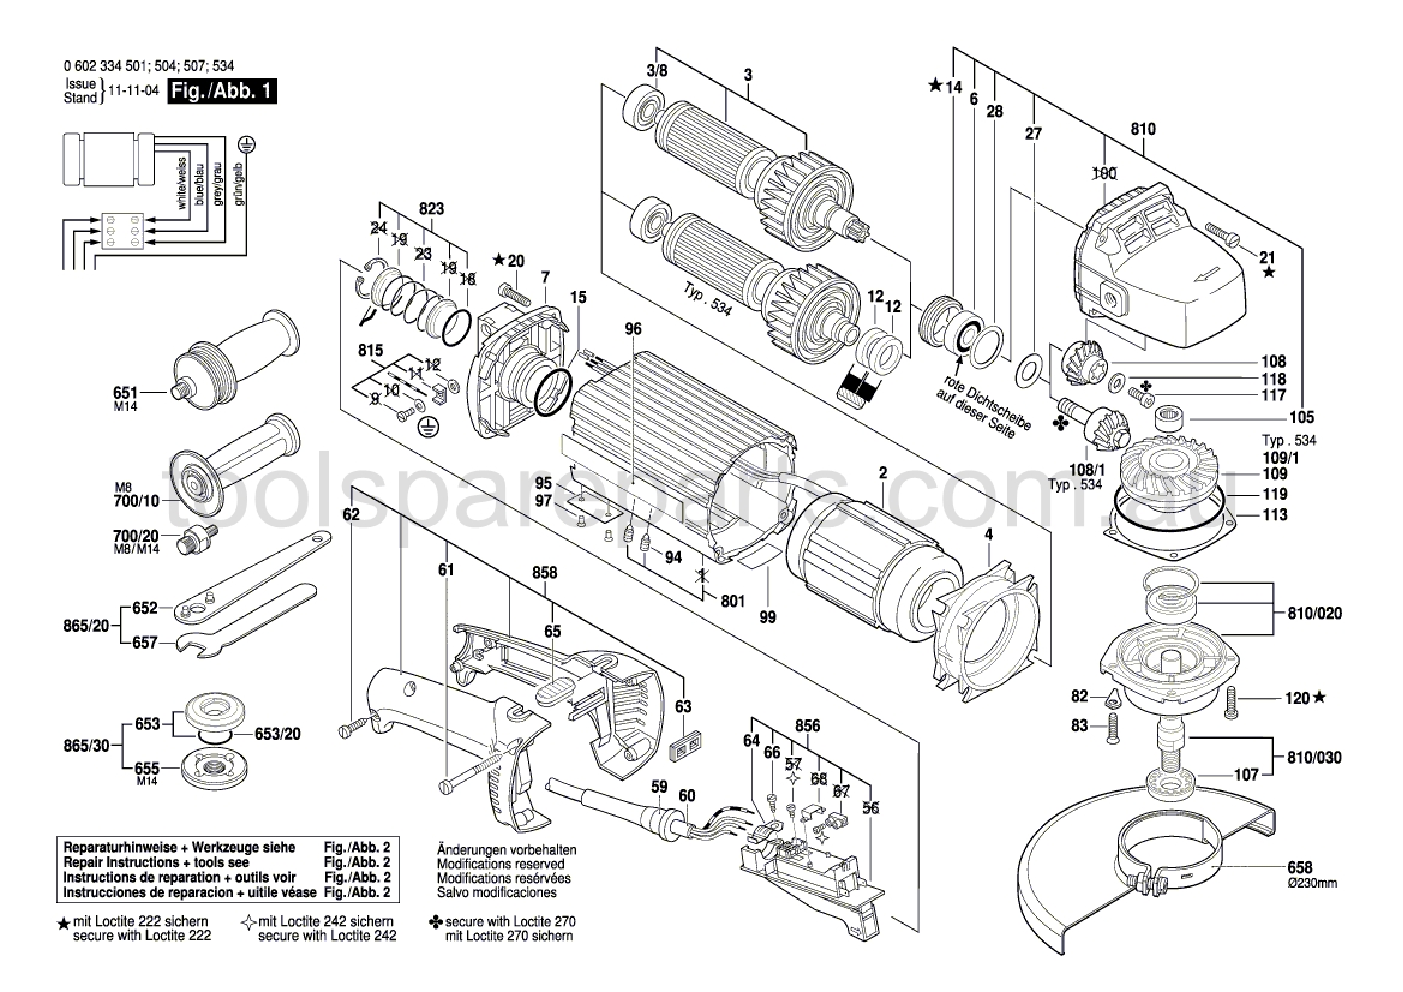 Bosch HWS 810/230 0602334534  Diagram 1